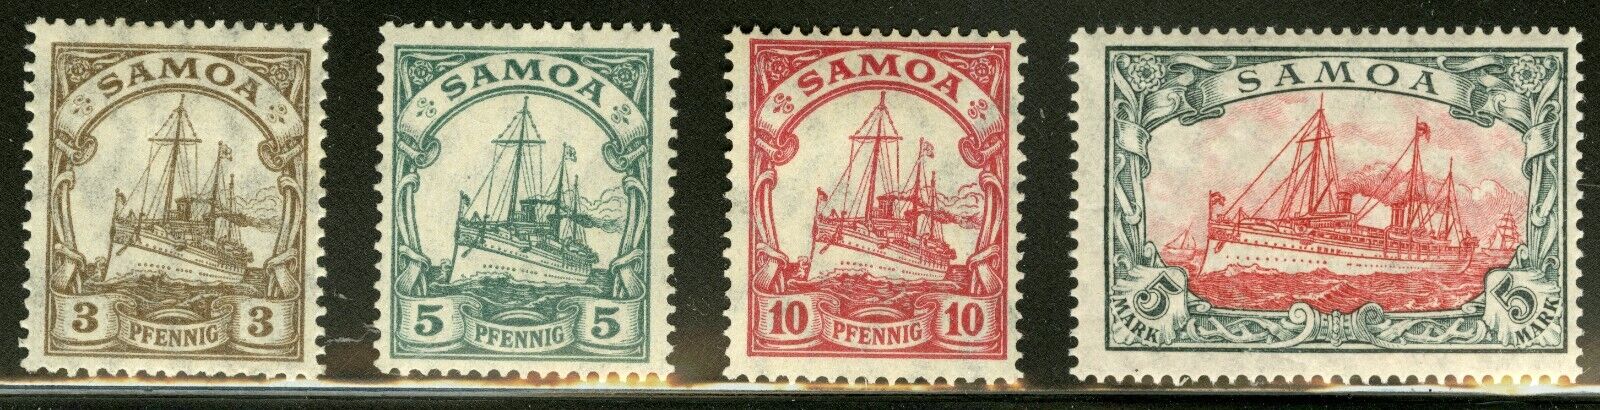 Samoa   1915   Scott #70-73  Mint Lightly Hinged Set